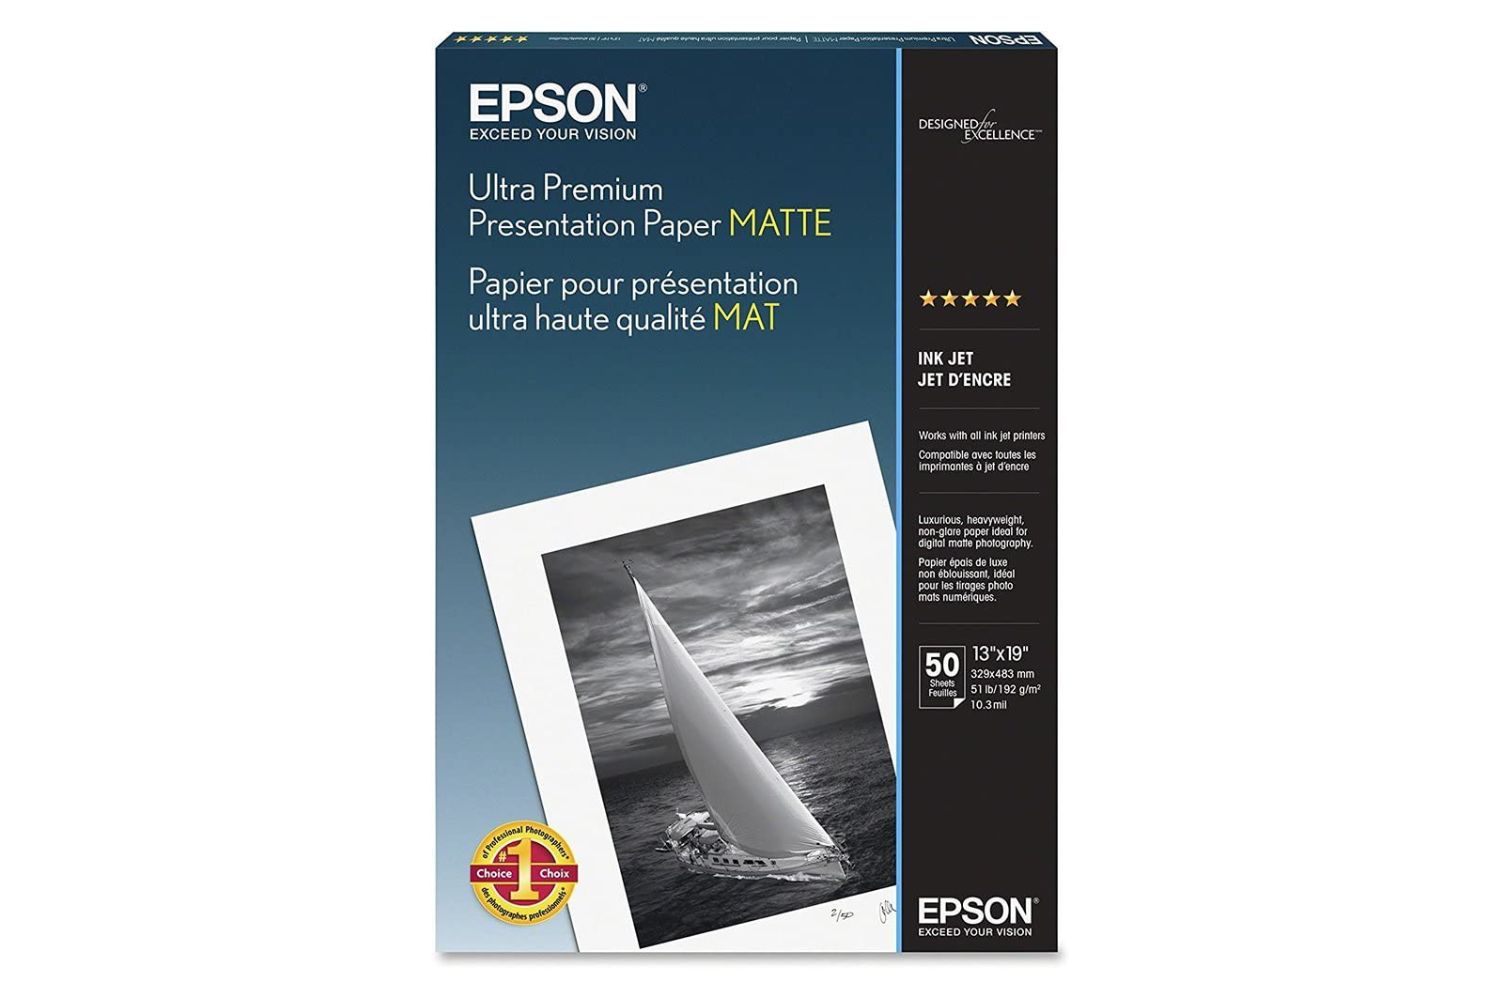  Epson Ultra Premium Presentation Paper Matte